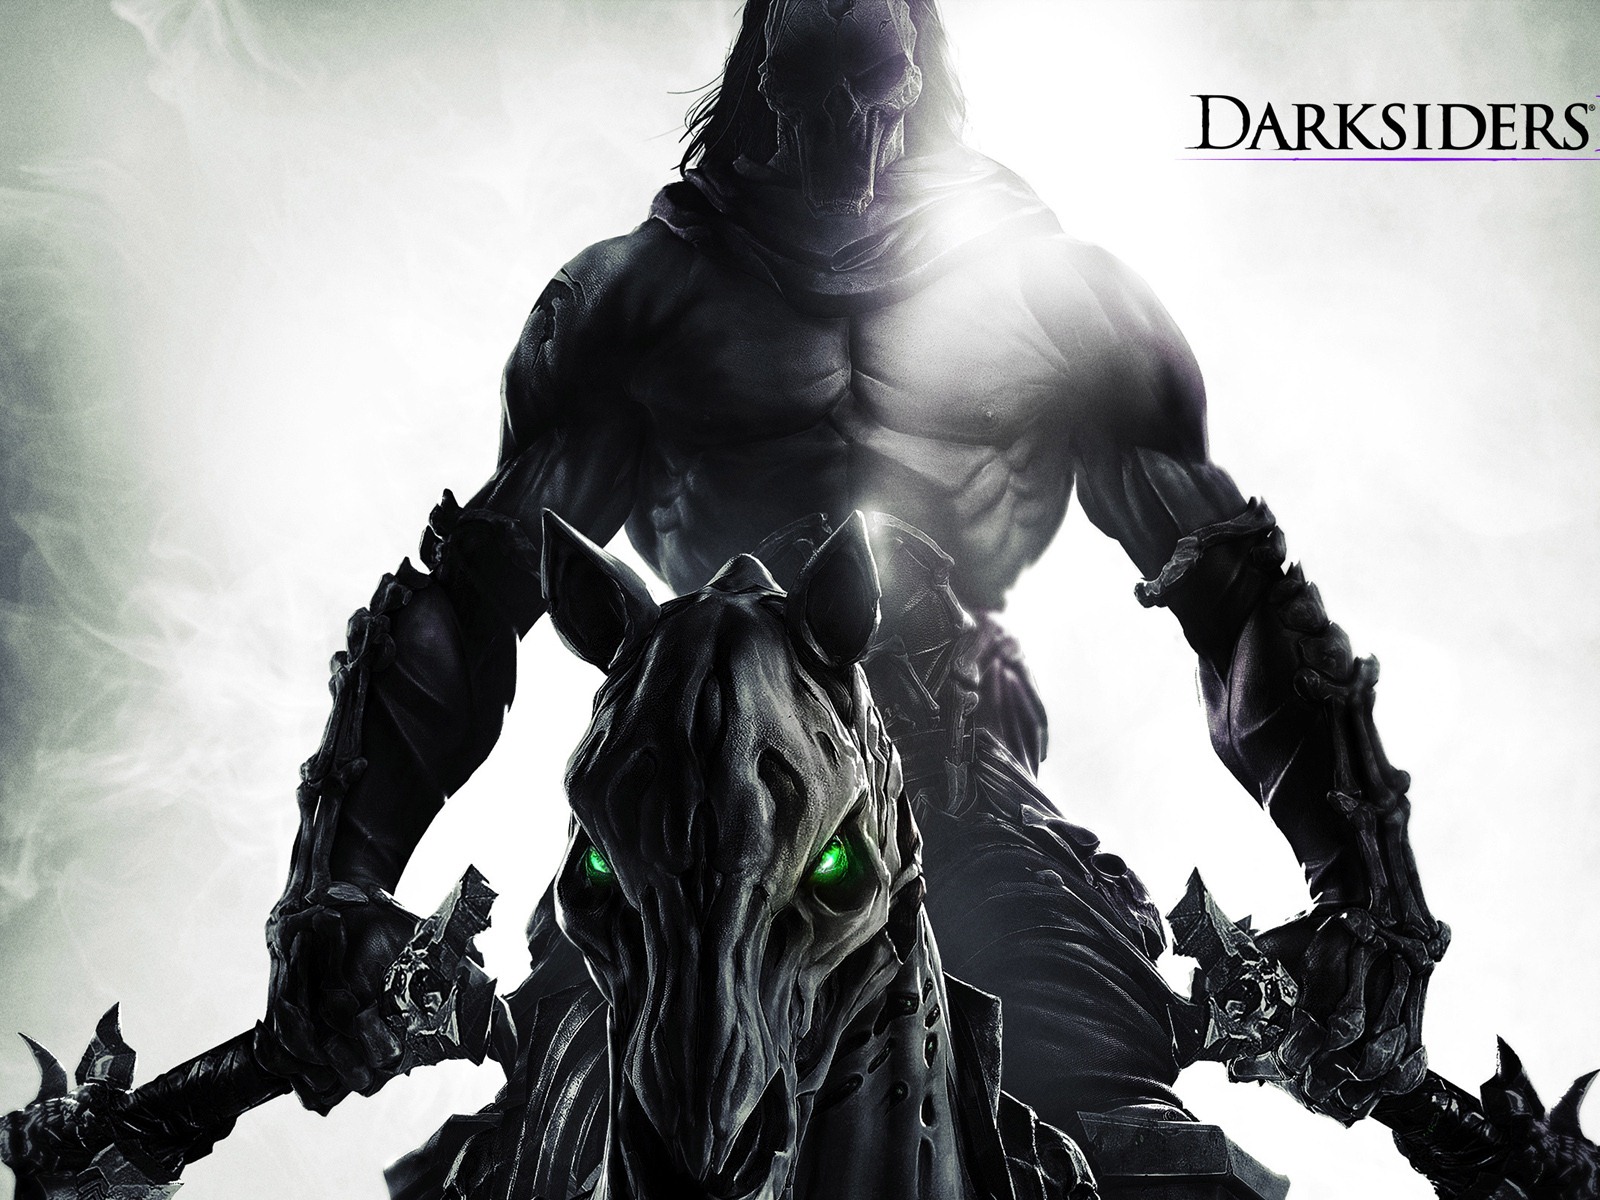 Darksiders II 暗黑血统 2 游戏高清壁纸1 - 1600x1200